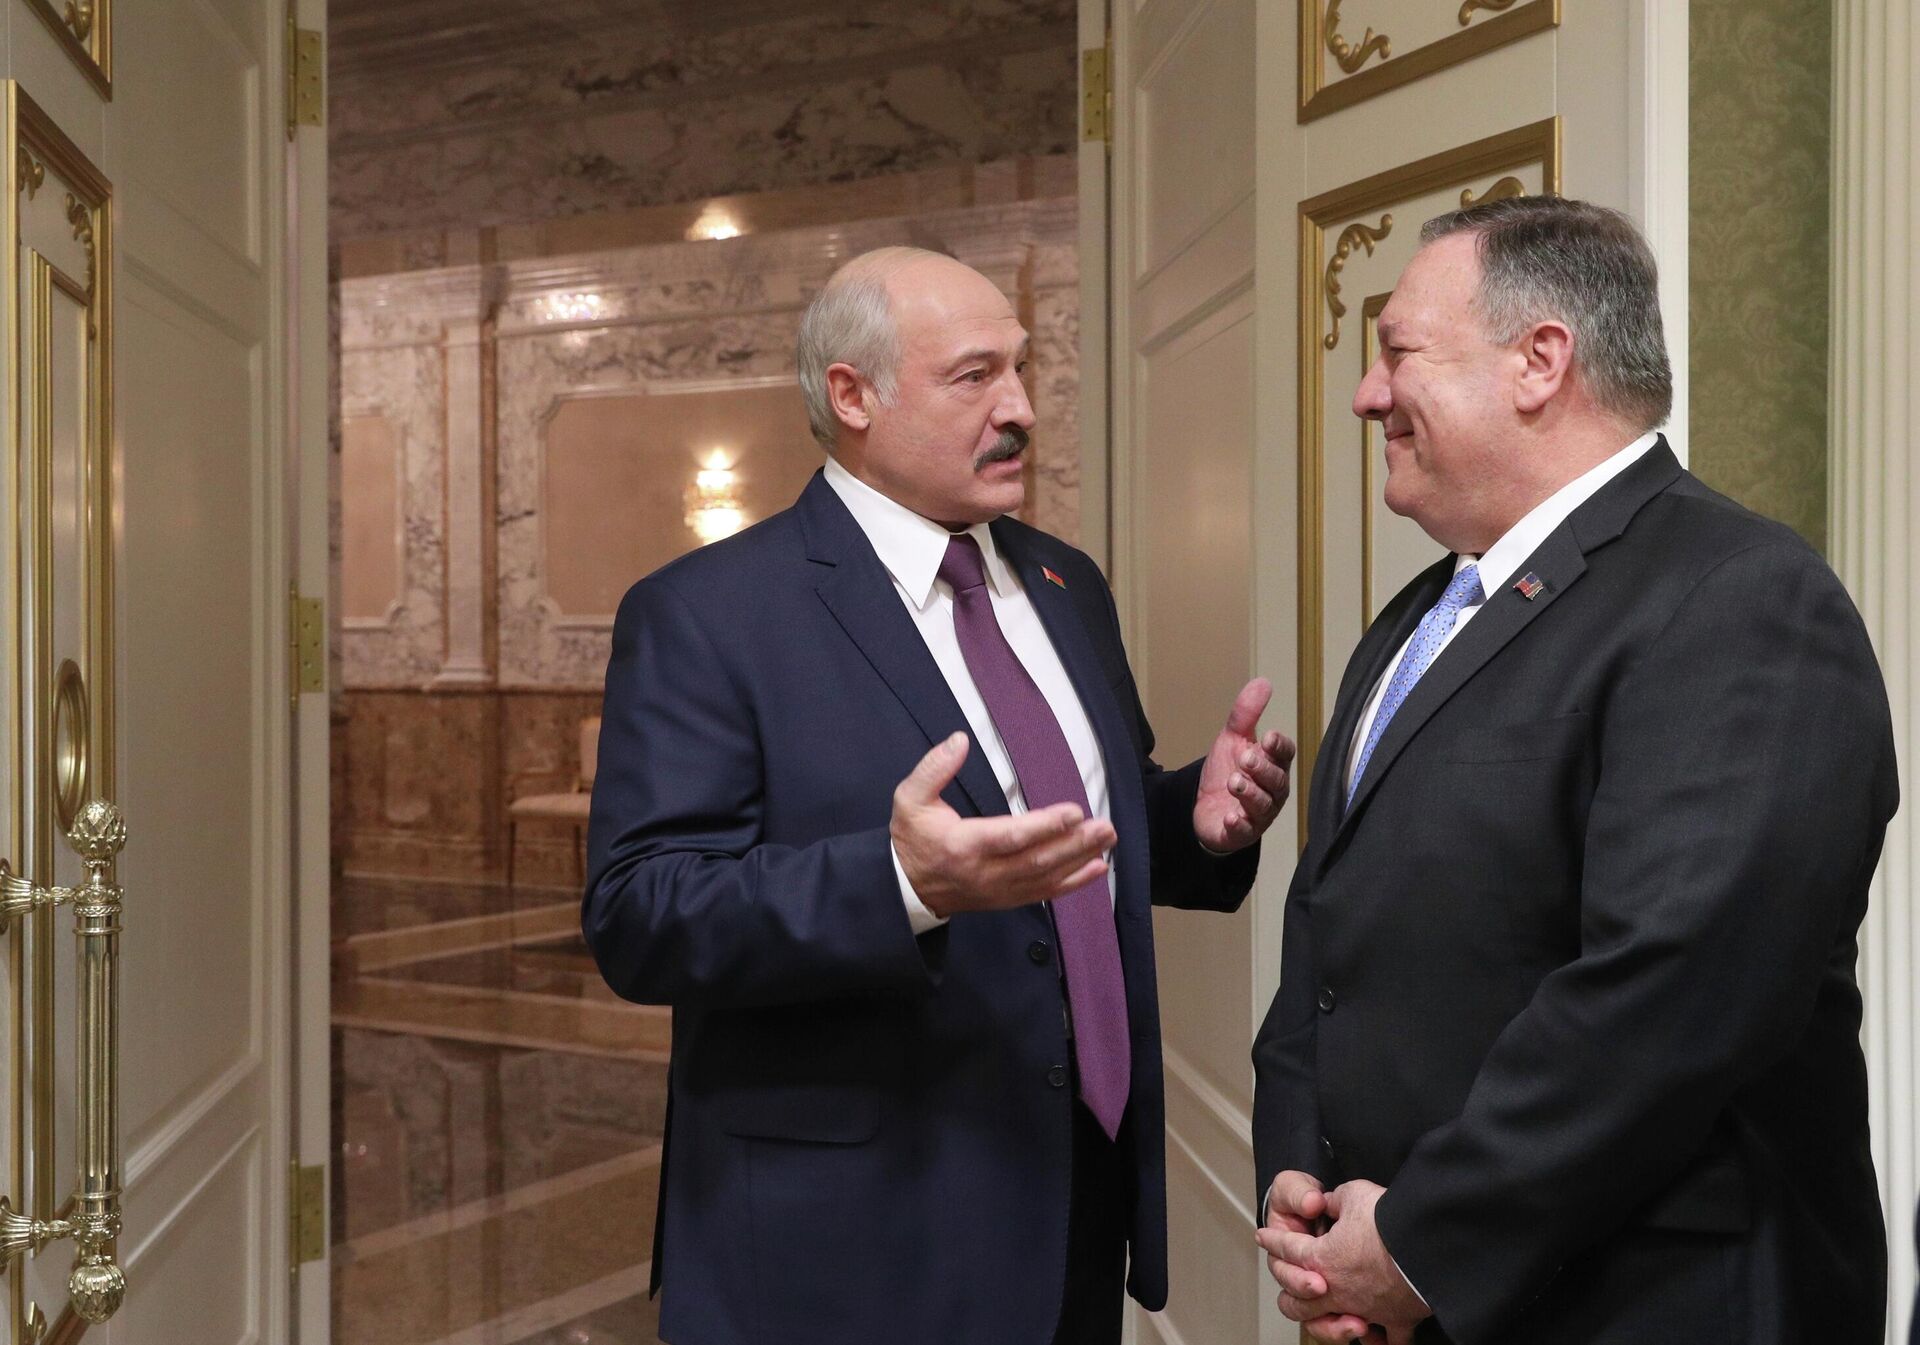 Президент Белорусси Александр Лукашенко во время встречи с госсекретарем США Майком Помпео в Минске - РИА Новости, 1920, 09.04.2021